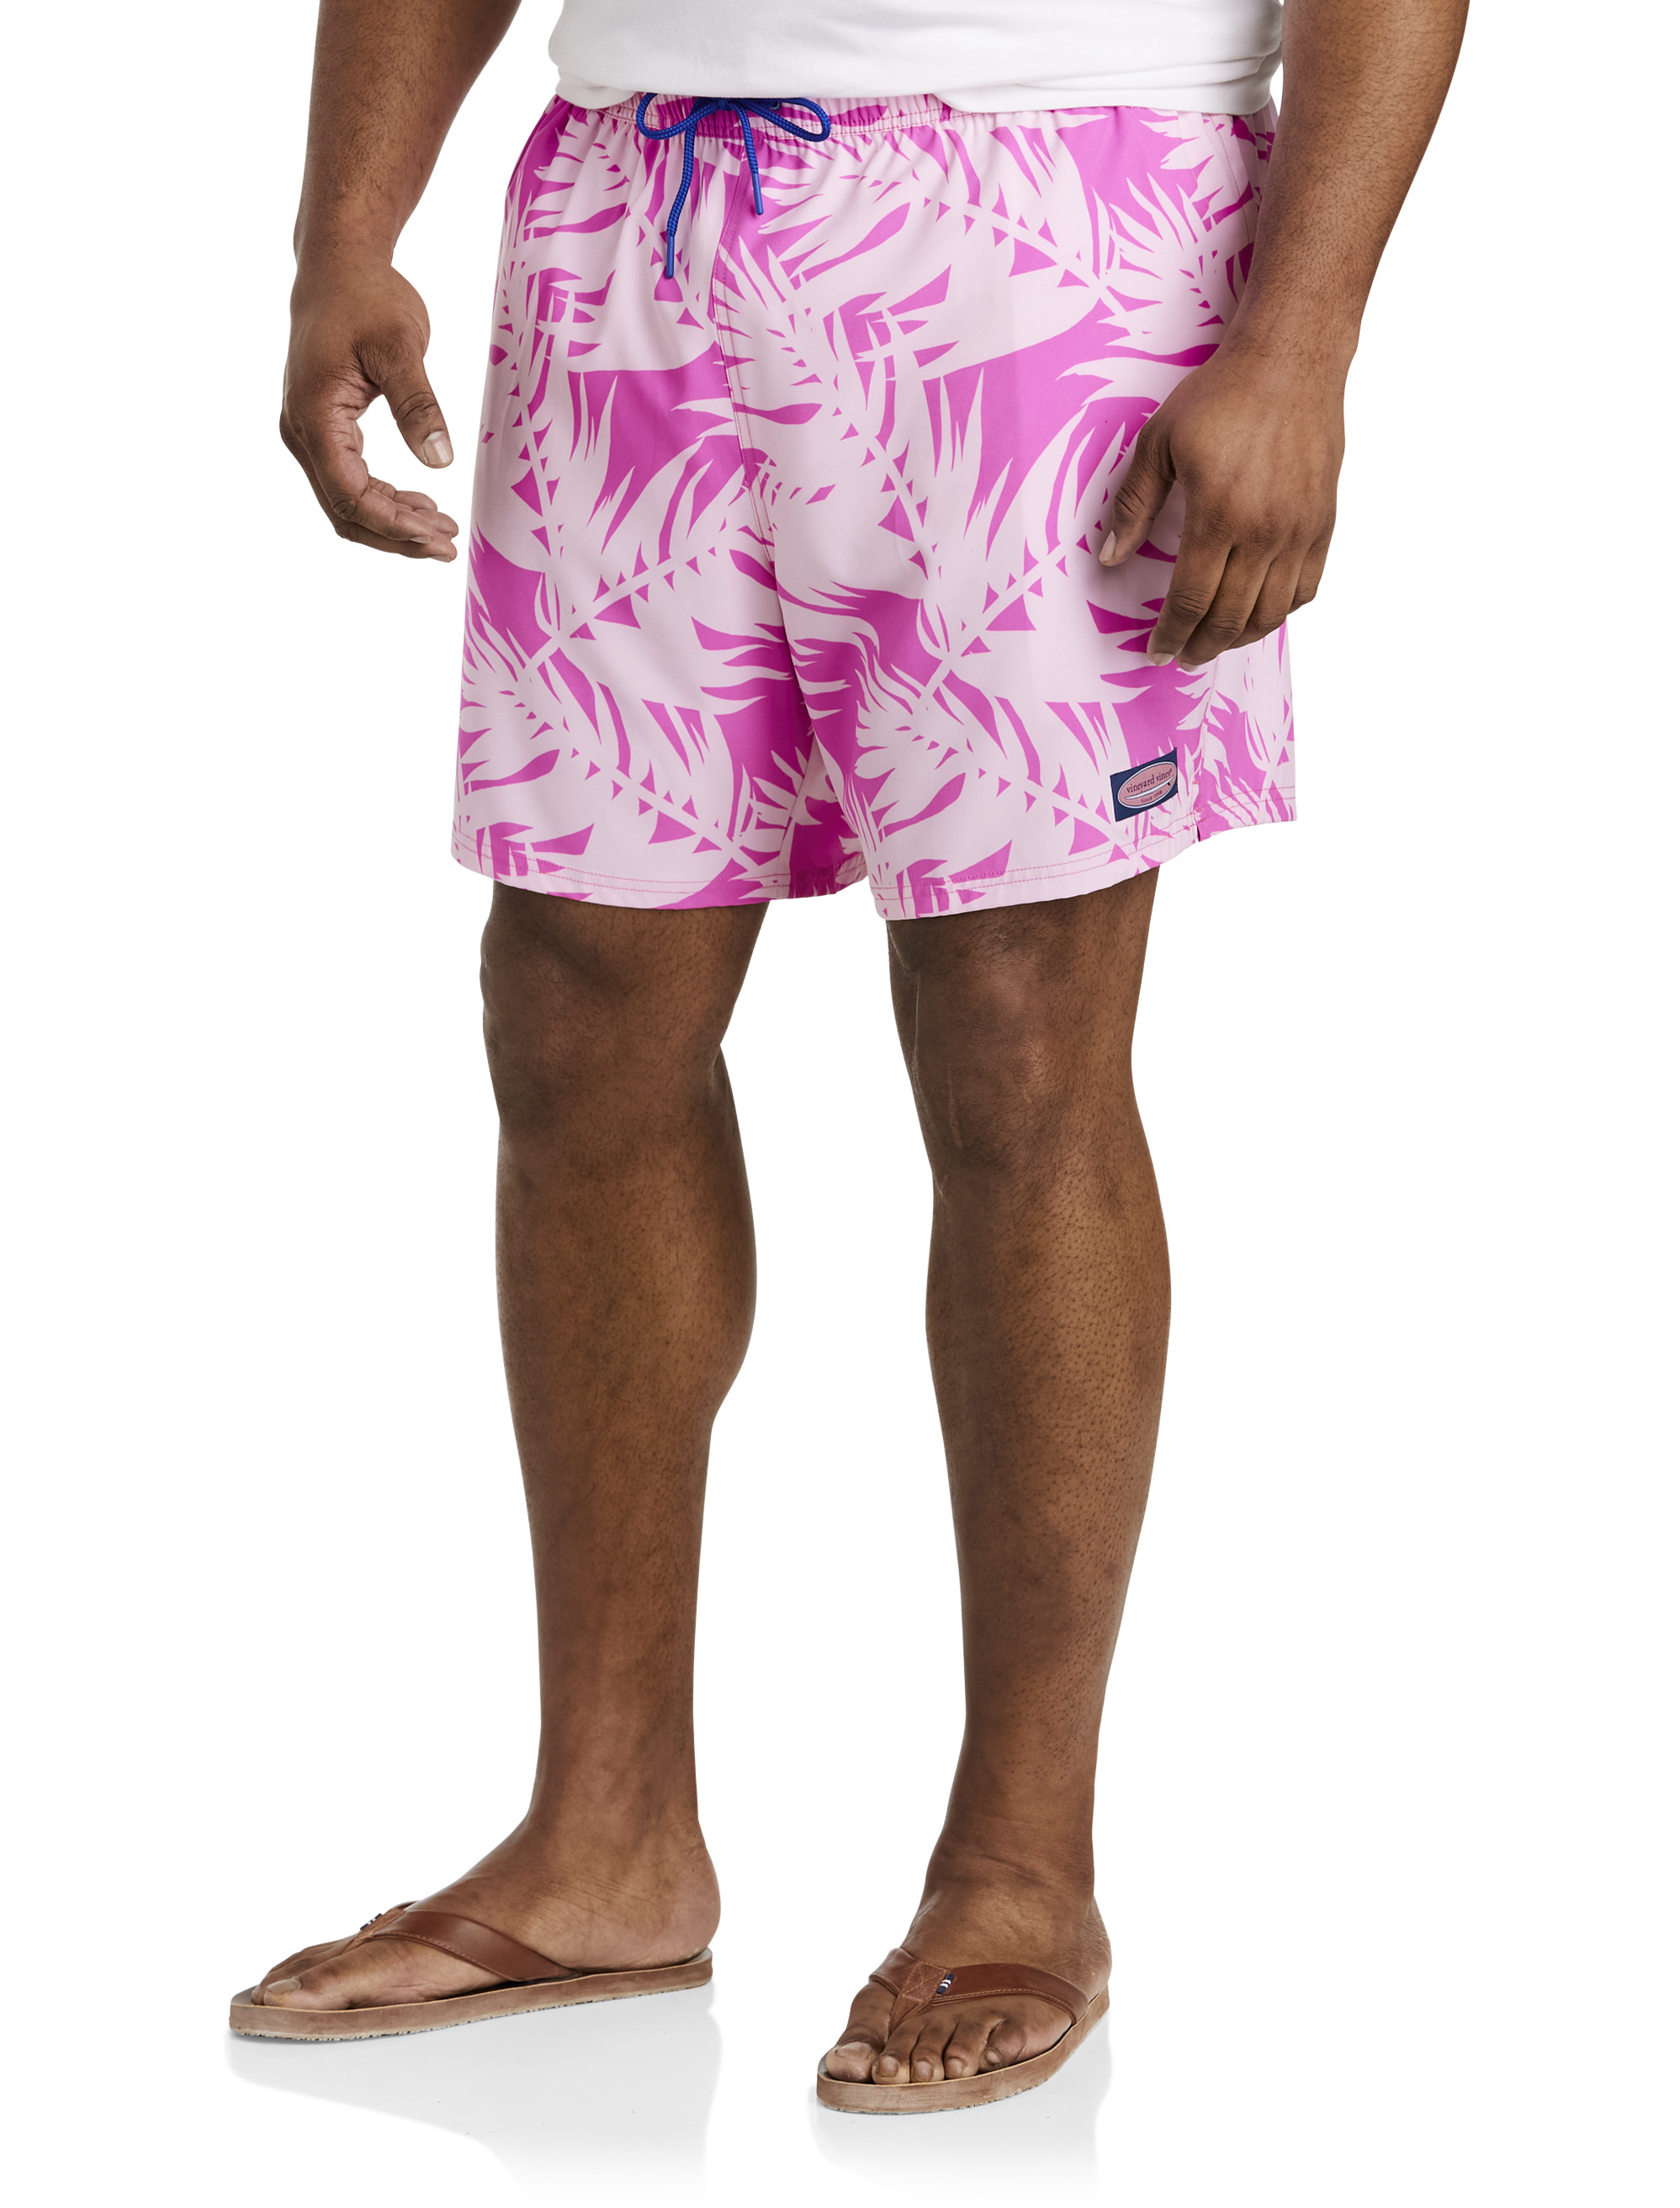 Men's Pretzel Cookie Swim Trunks Quick Dry Swim Shorts Casual Beach Board Shorts  Swimwear S-3XL 